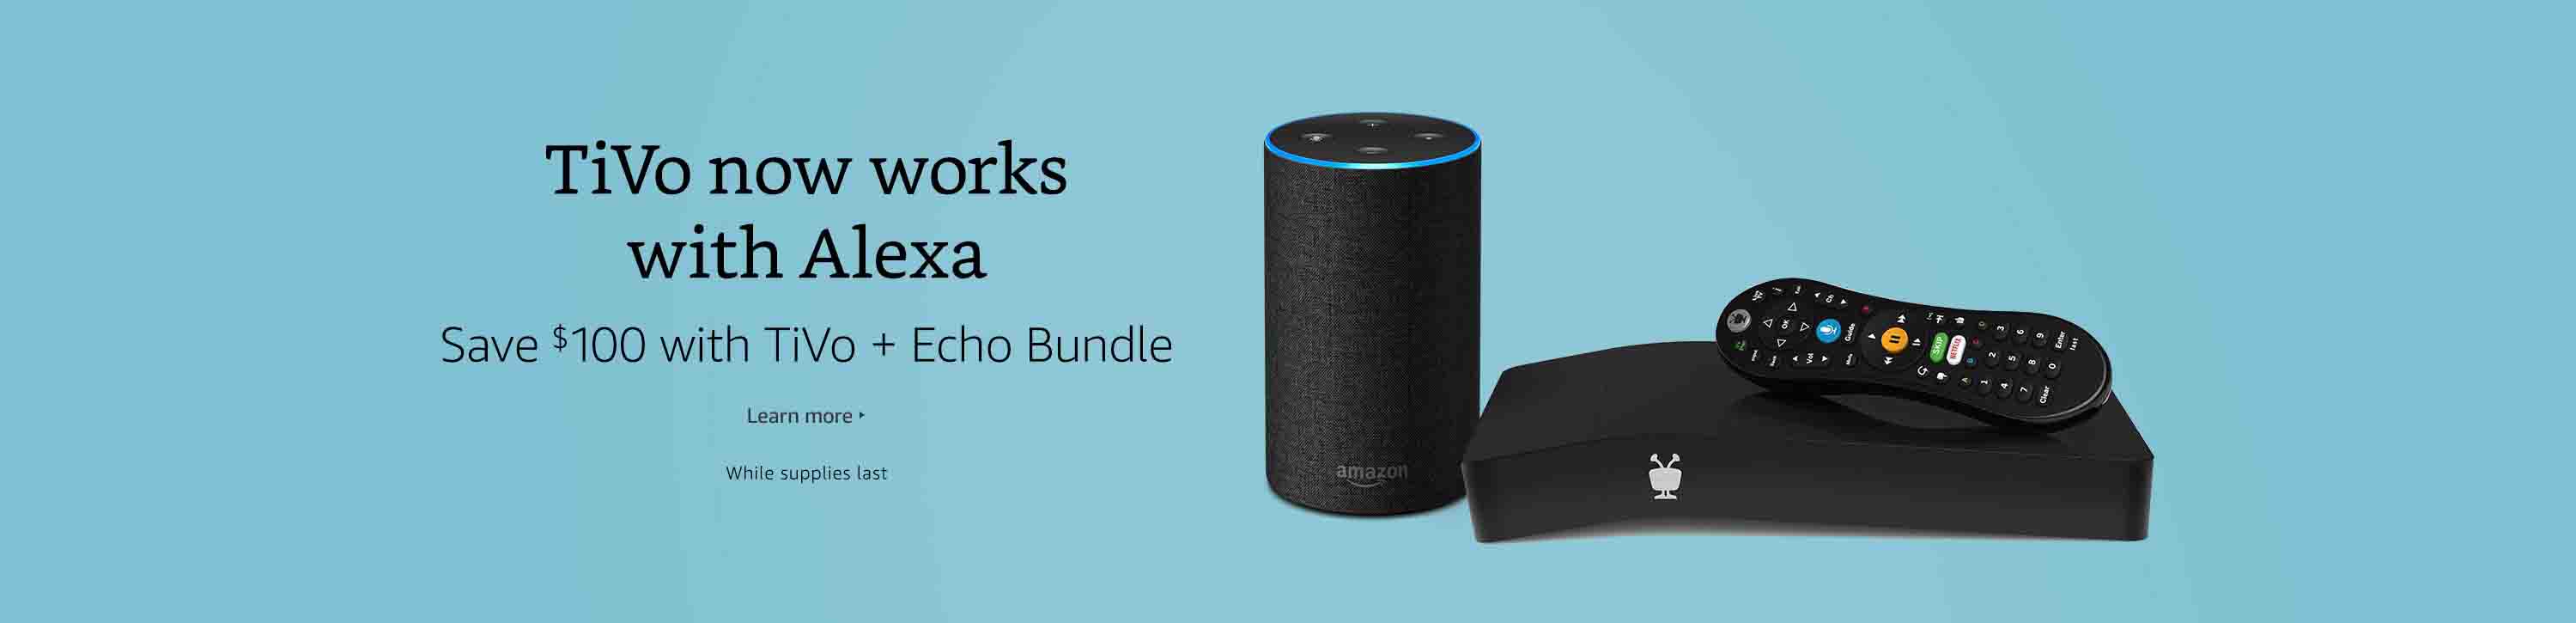 $100 off promo for TiVo BOLT+Amazon Echo bundle